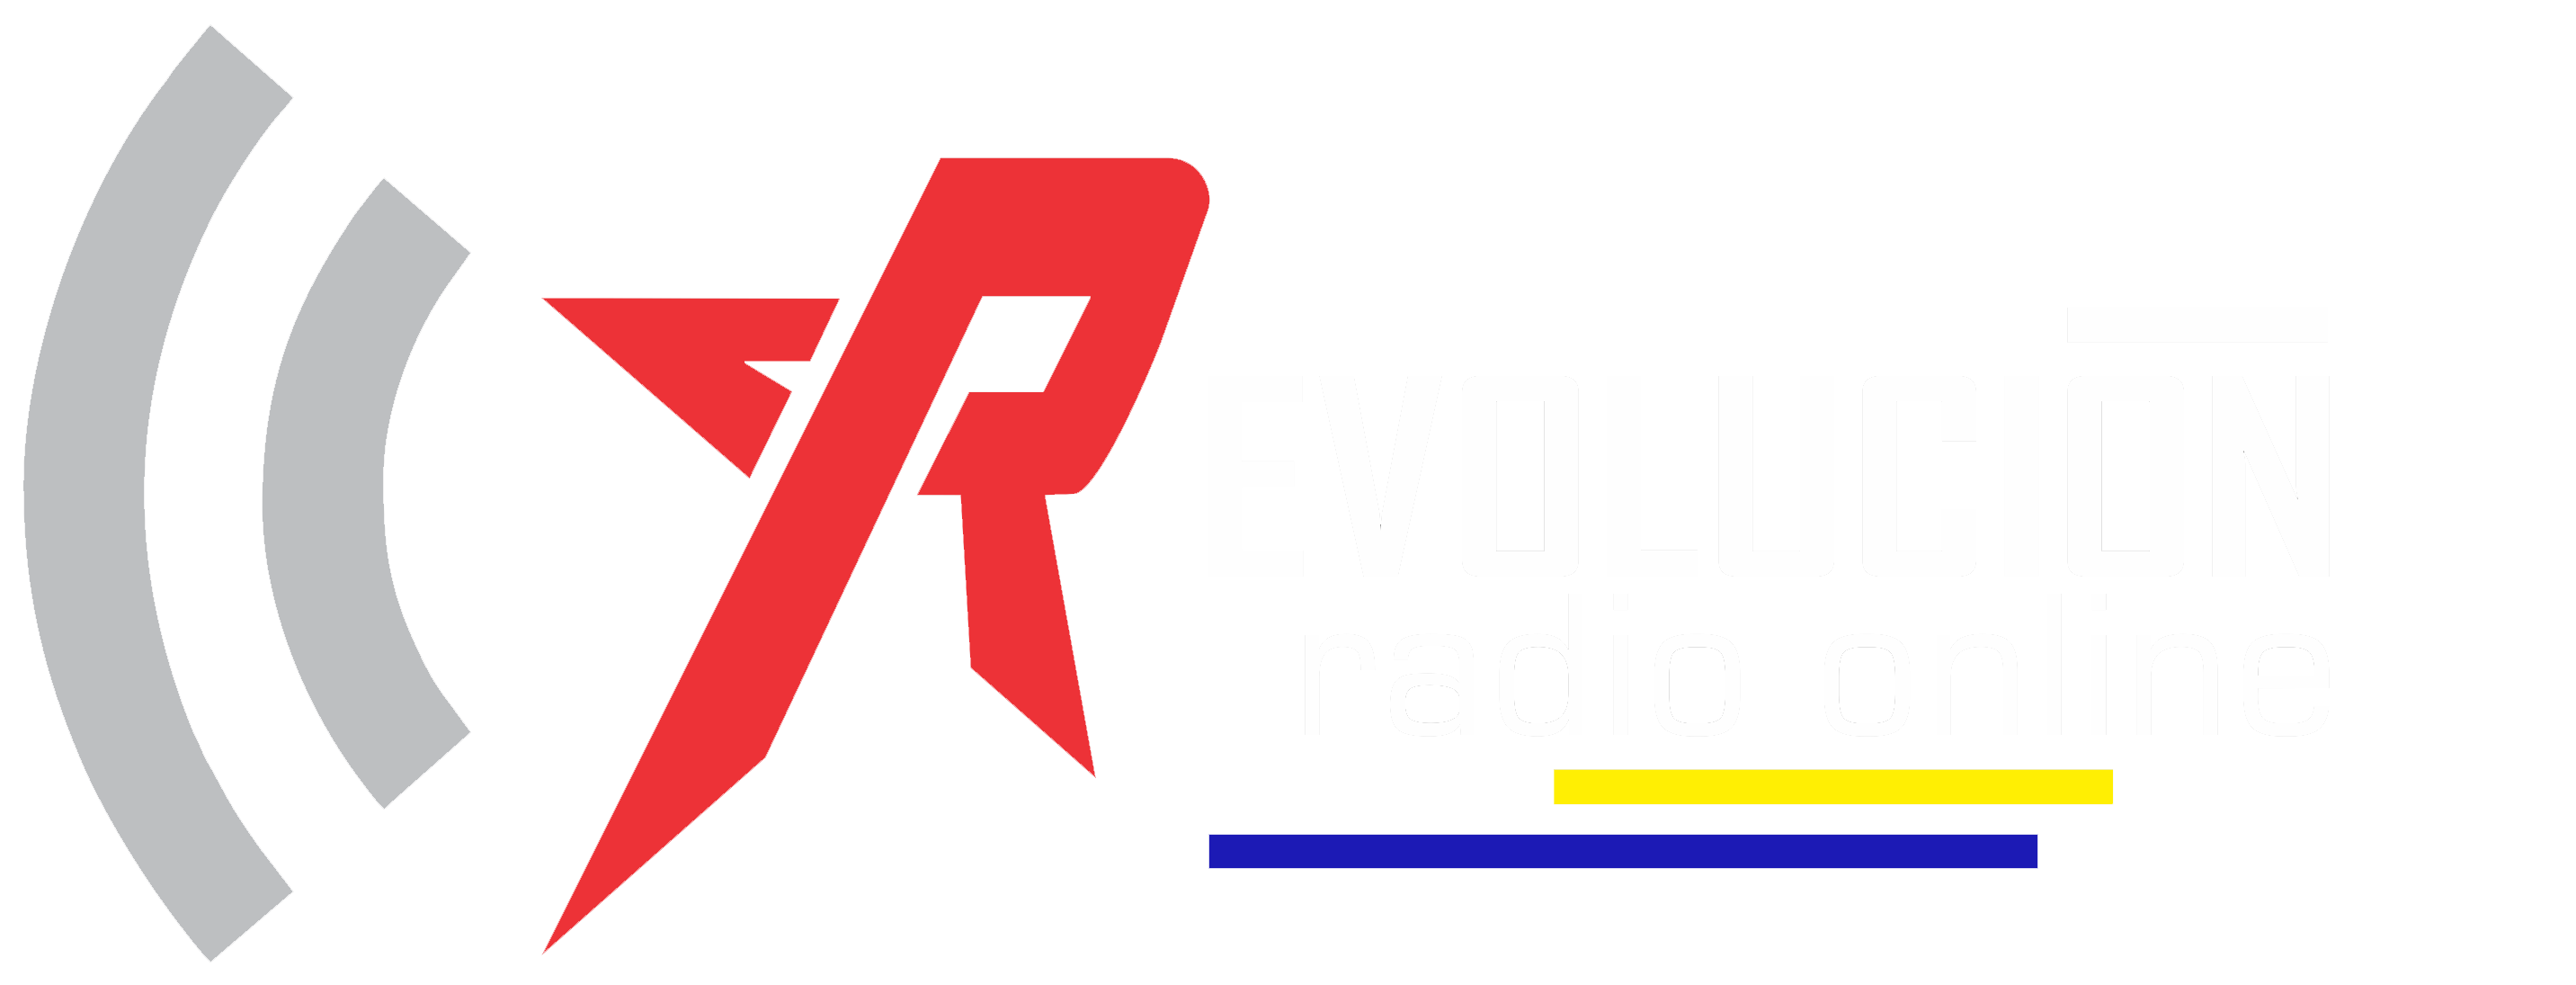 Revolucion Radio